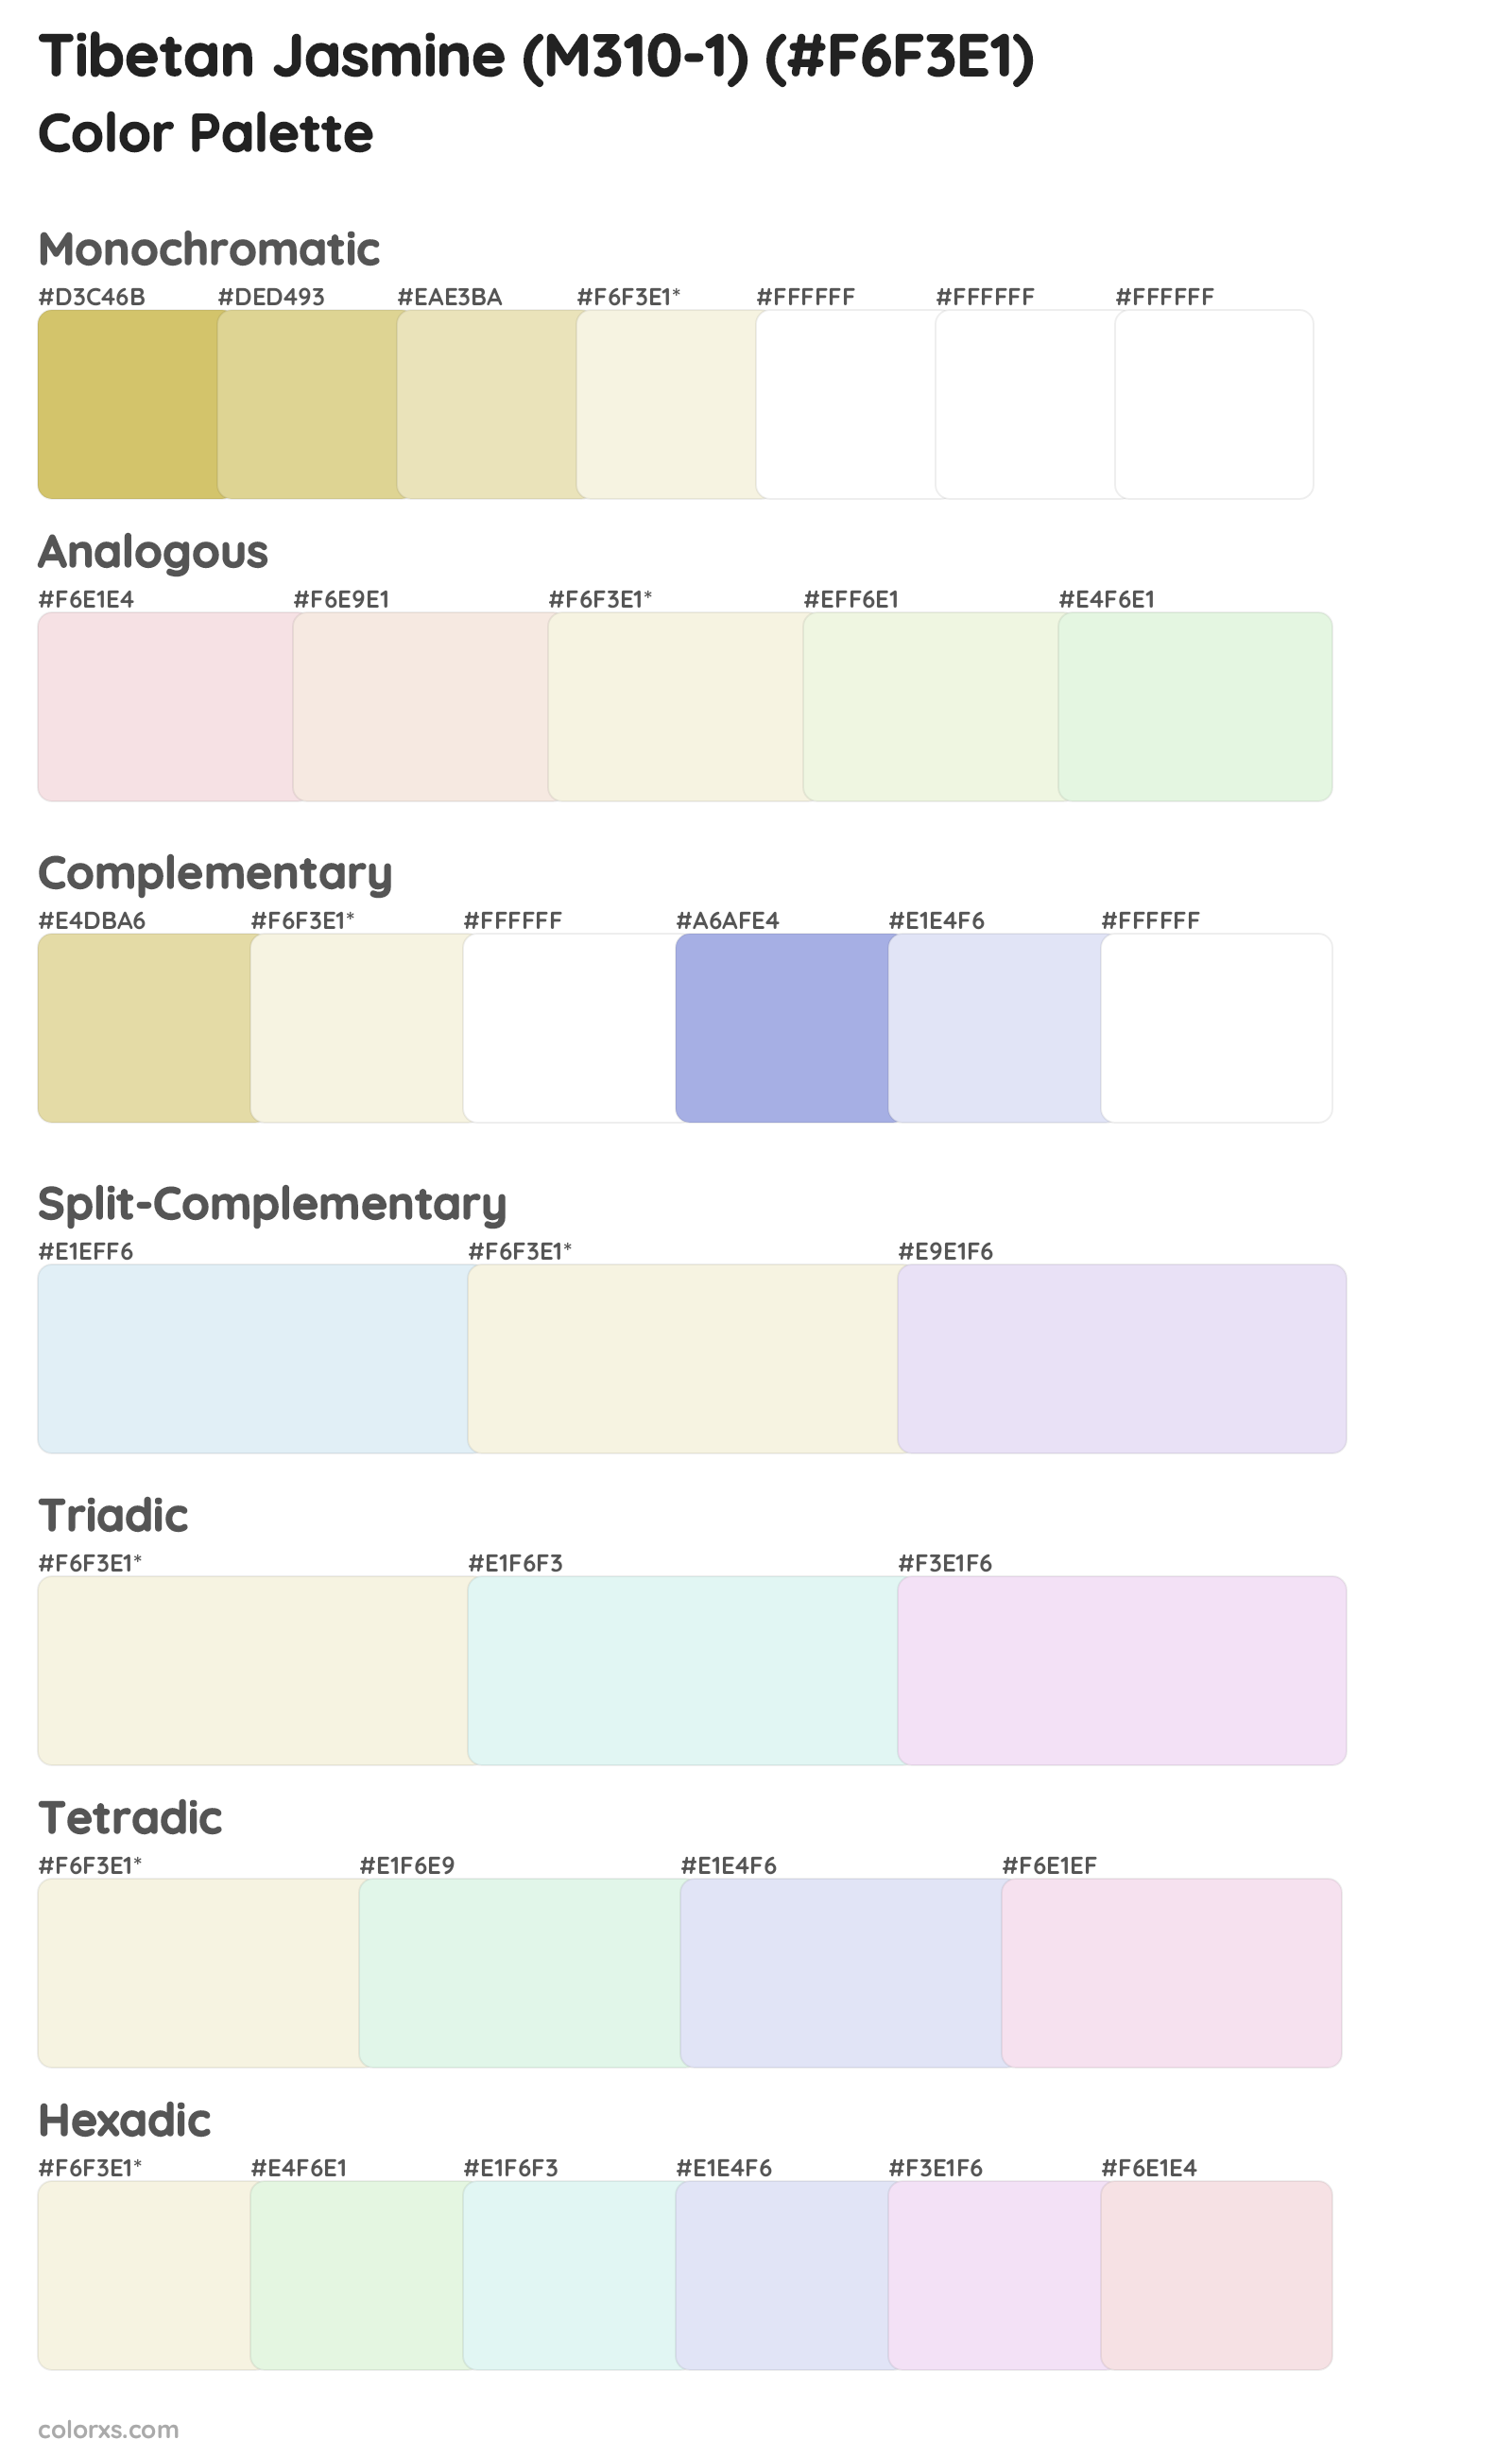 Tibetan Jasmine (M310-1) Color Scheme Palettes